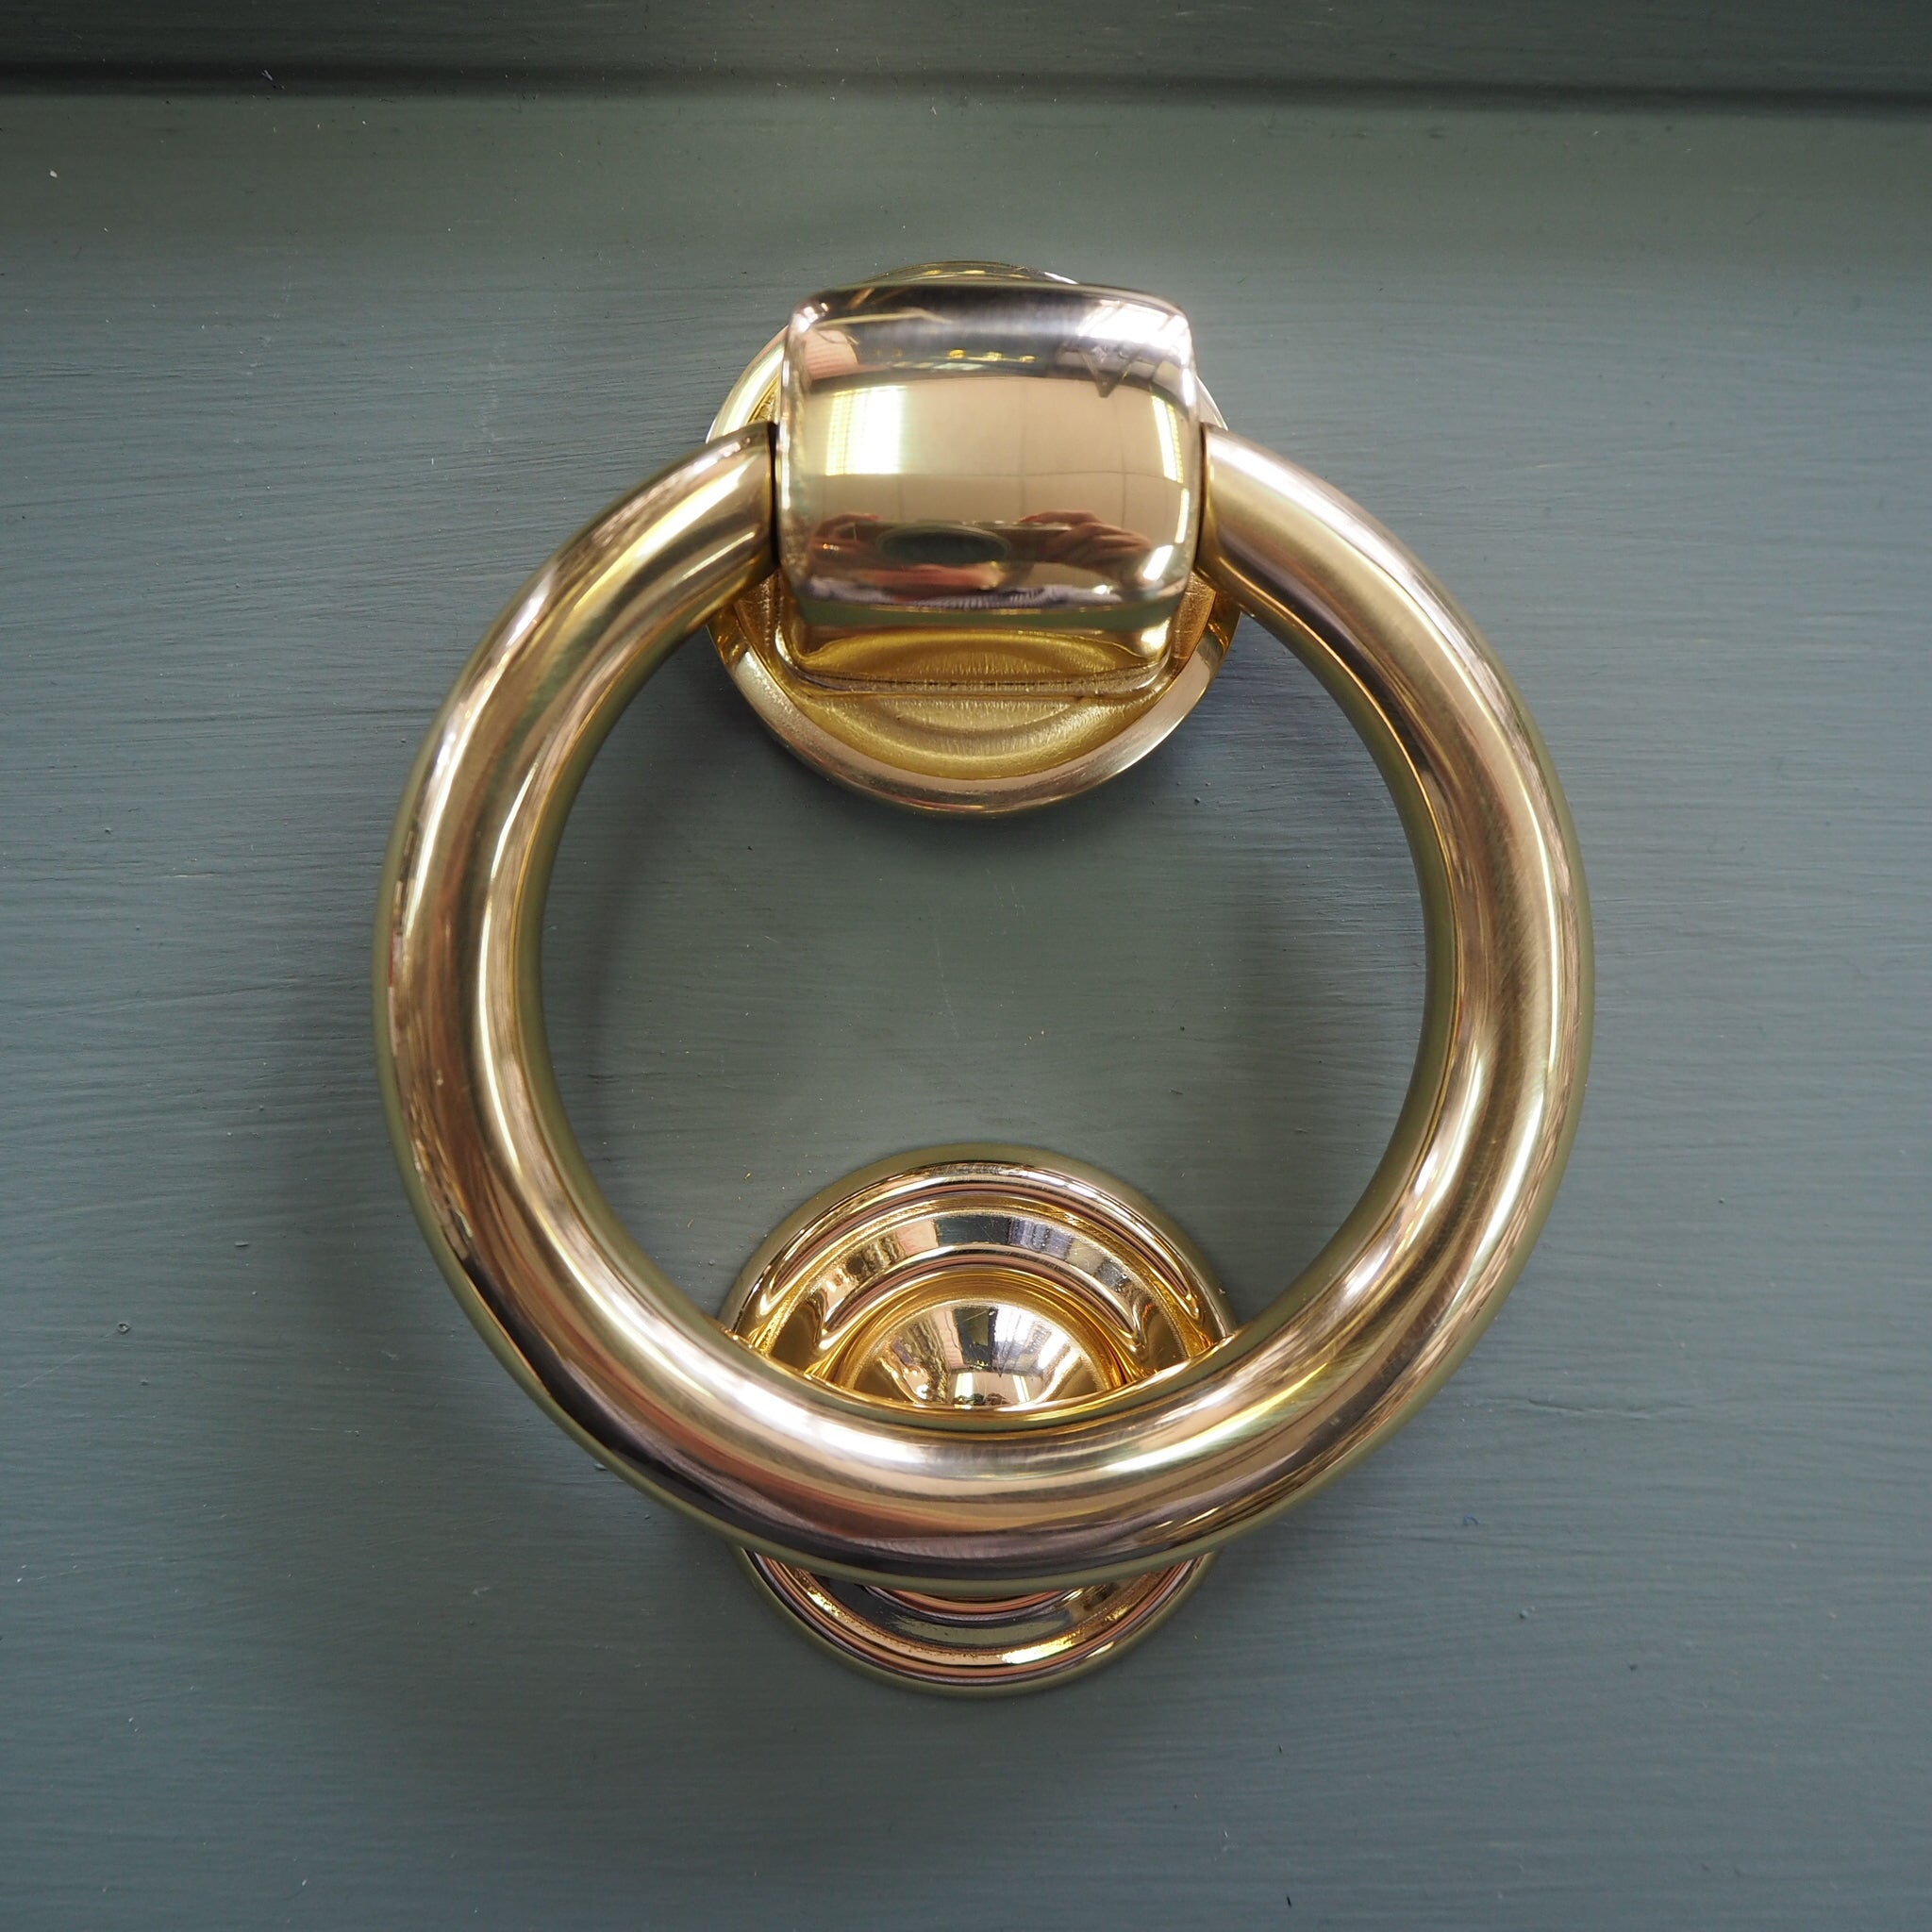 Polished brass ring knocker